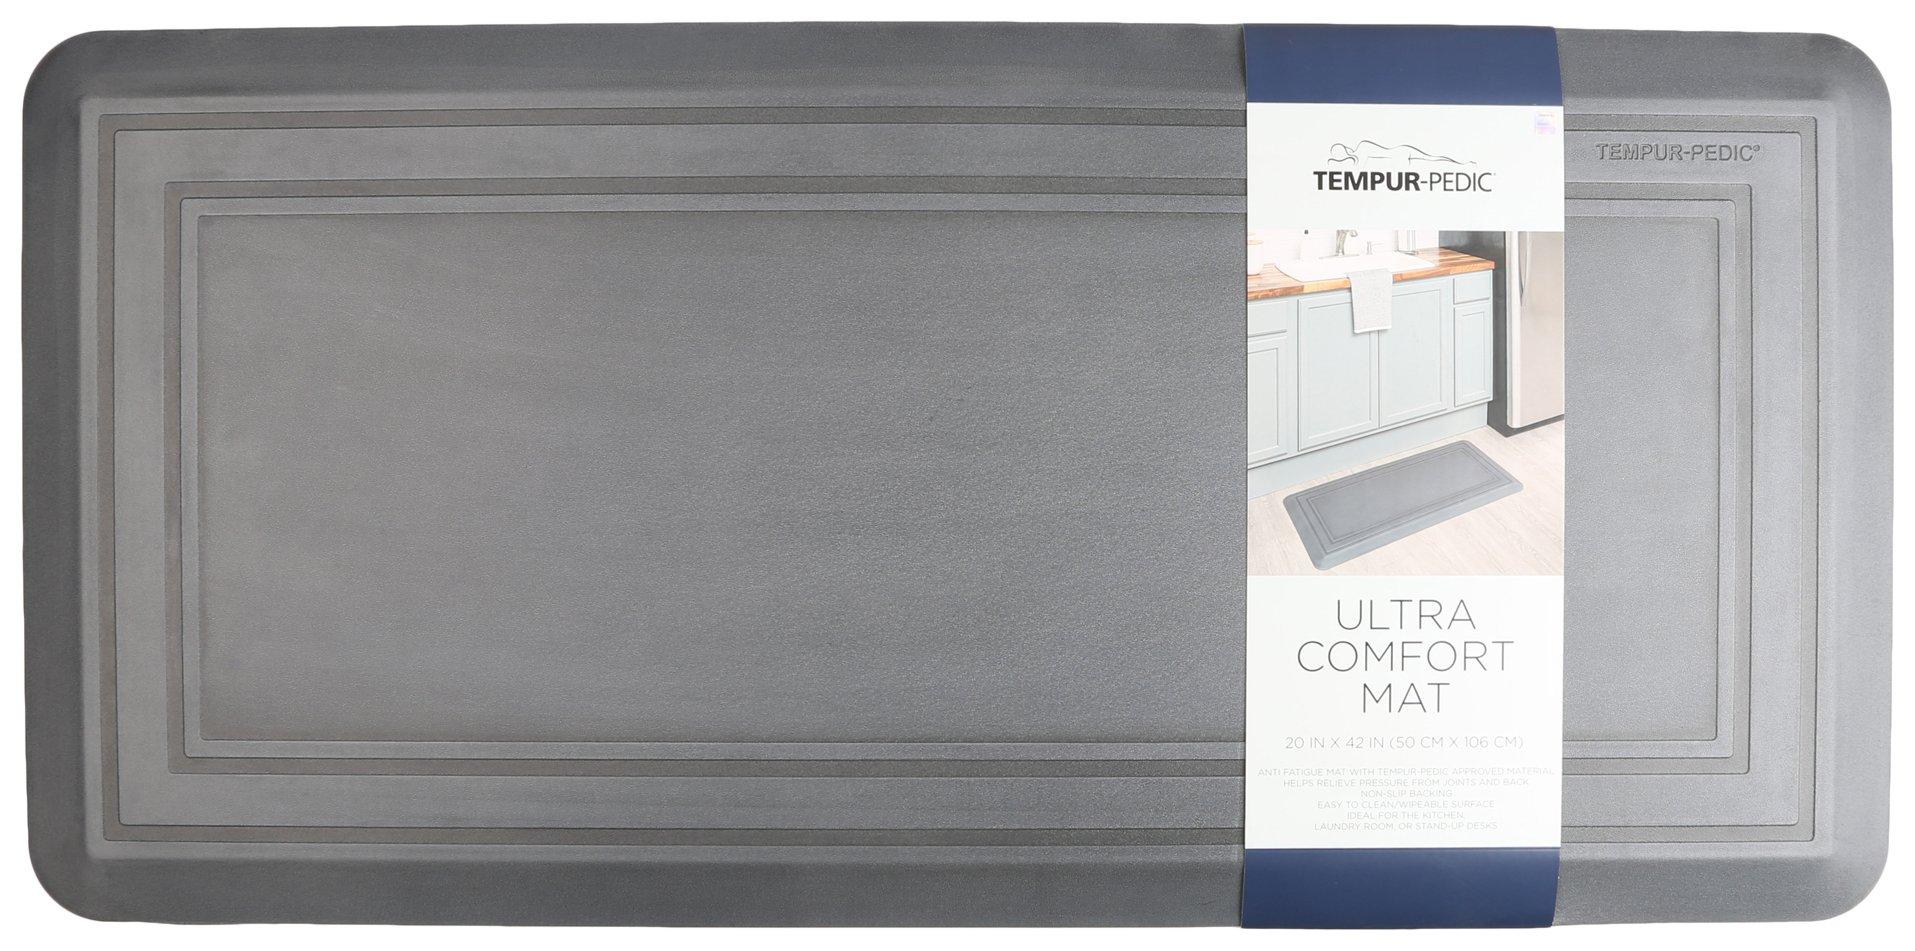 Mohawk 20x42 Tempur-Pedic Ultra Comfort Mat